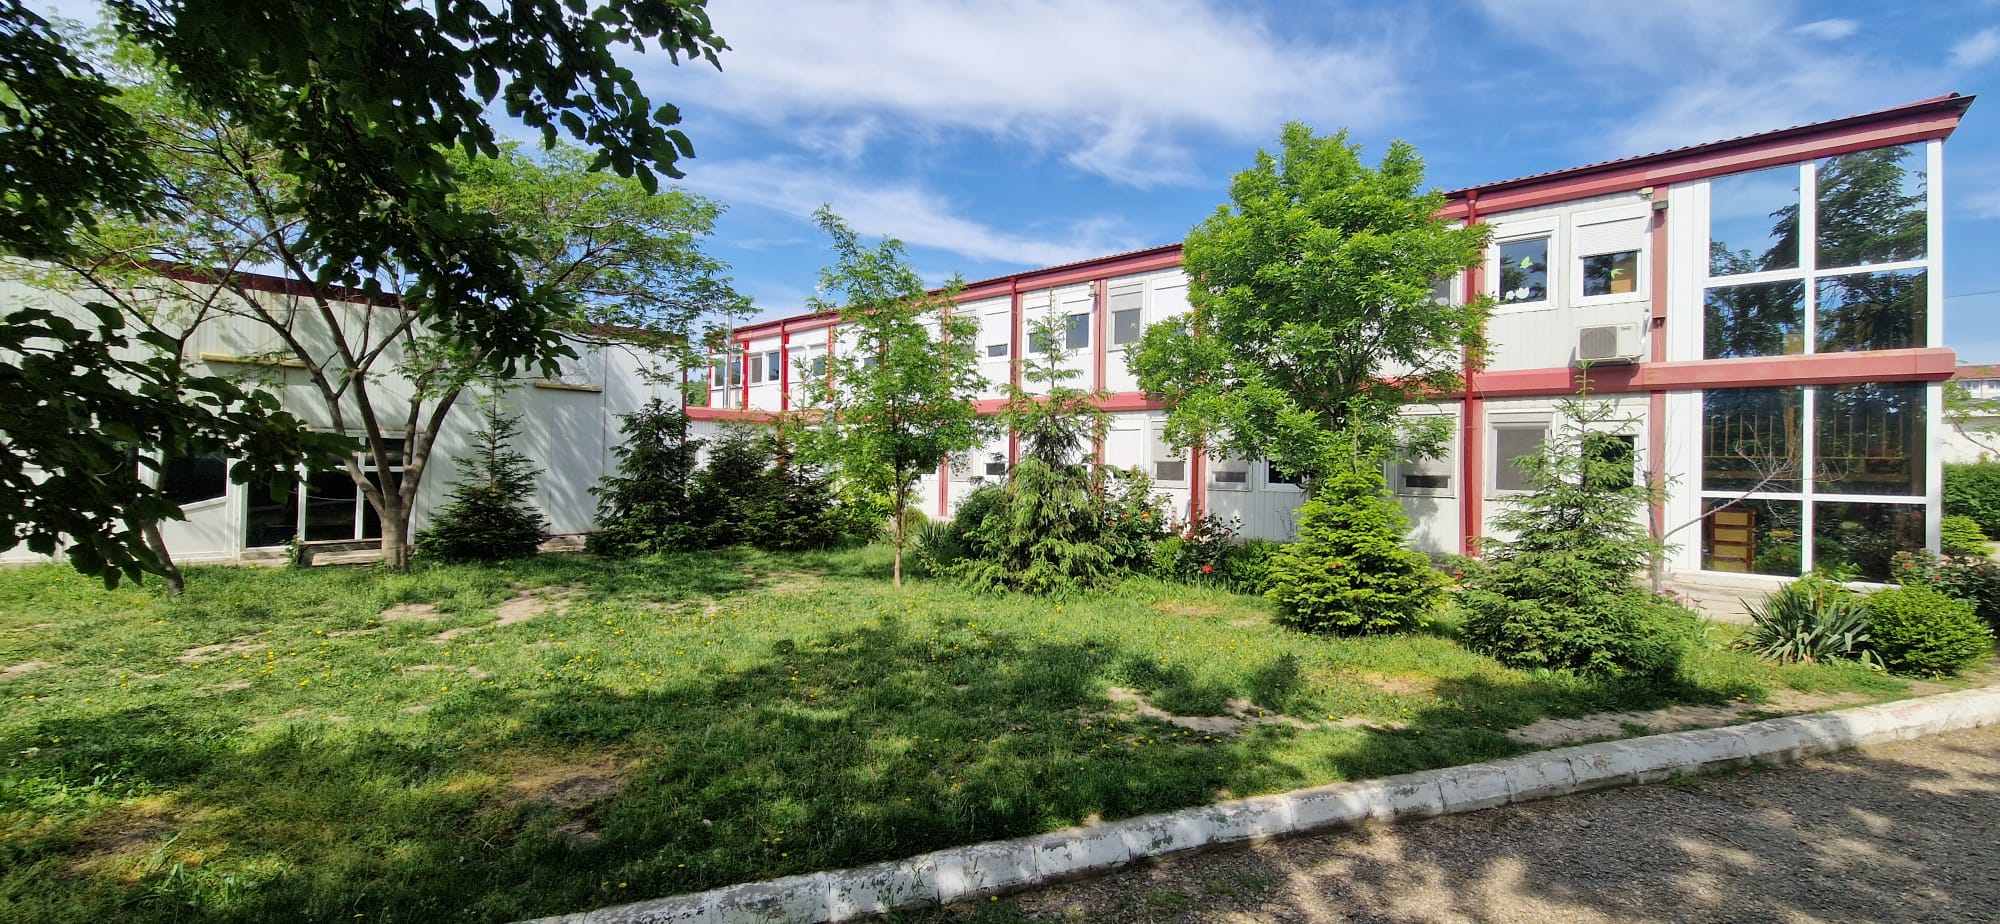 Foto 1. Școala Româno-Britanică, municipiul Galați, România